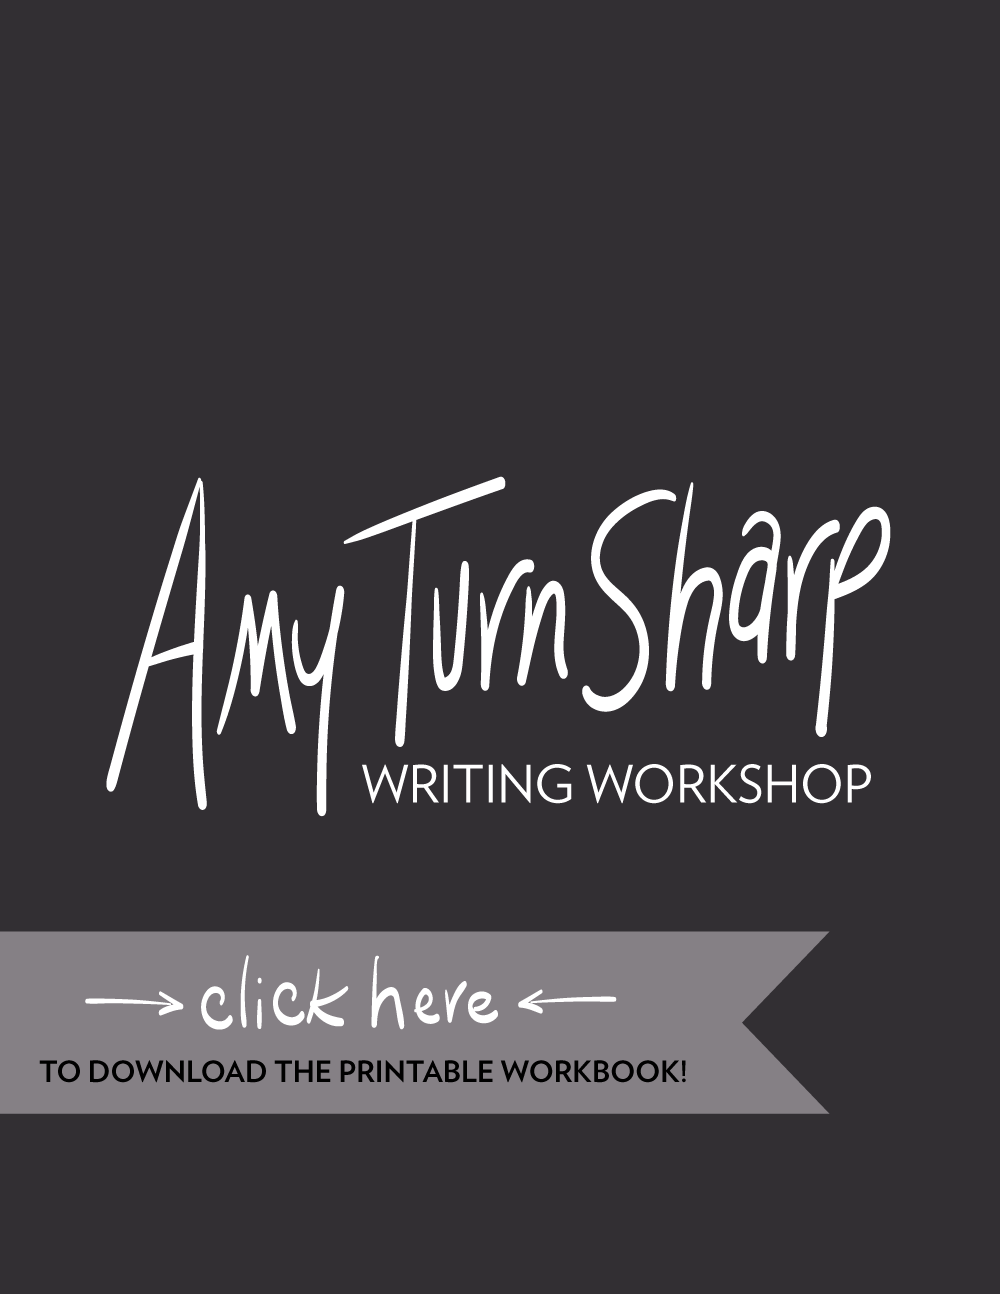 Amy Turn Sharp Writing Workshop  on OMHG